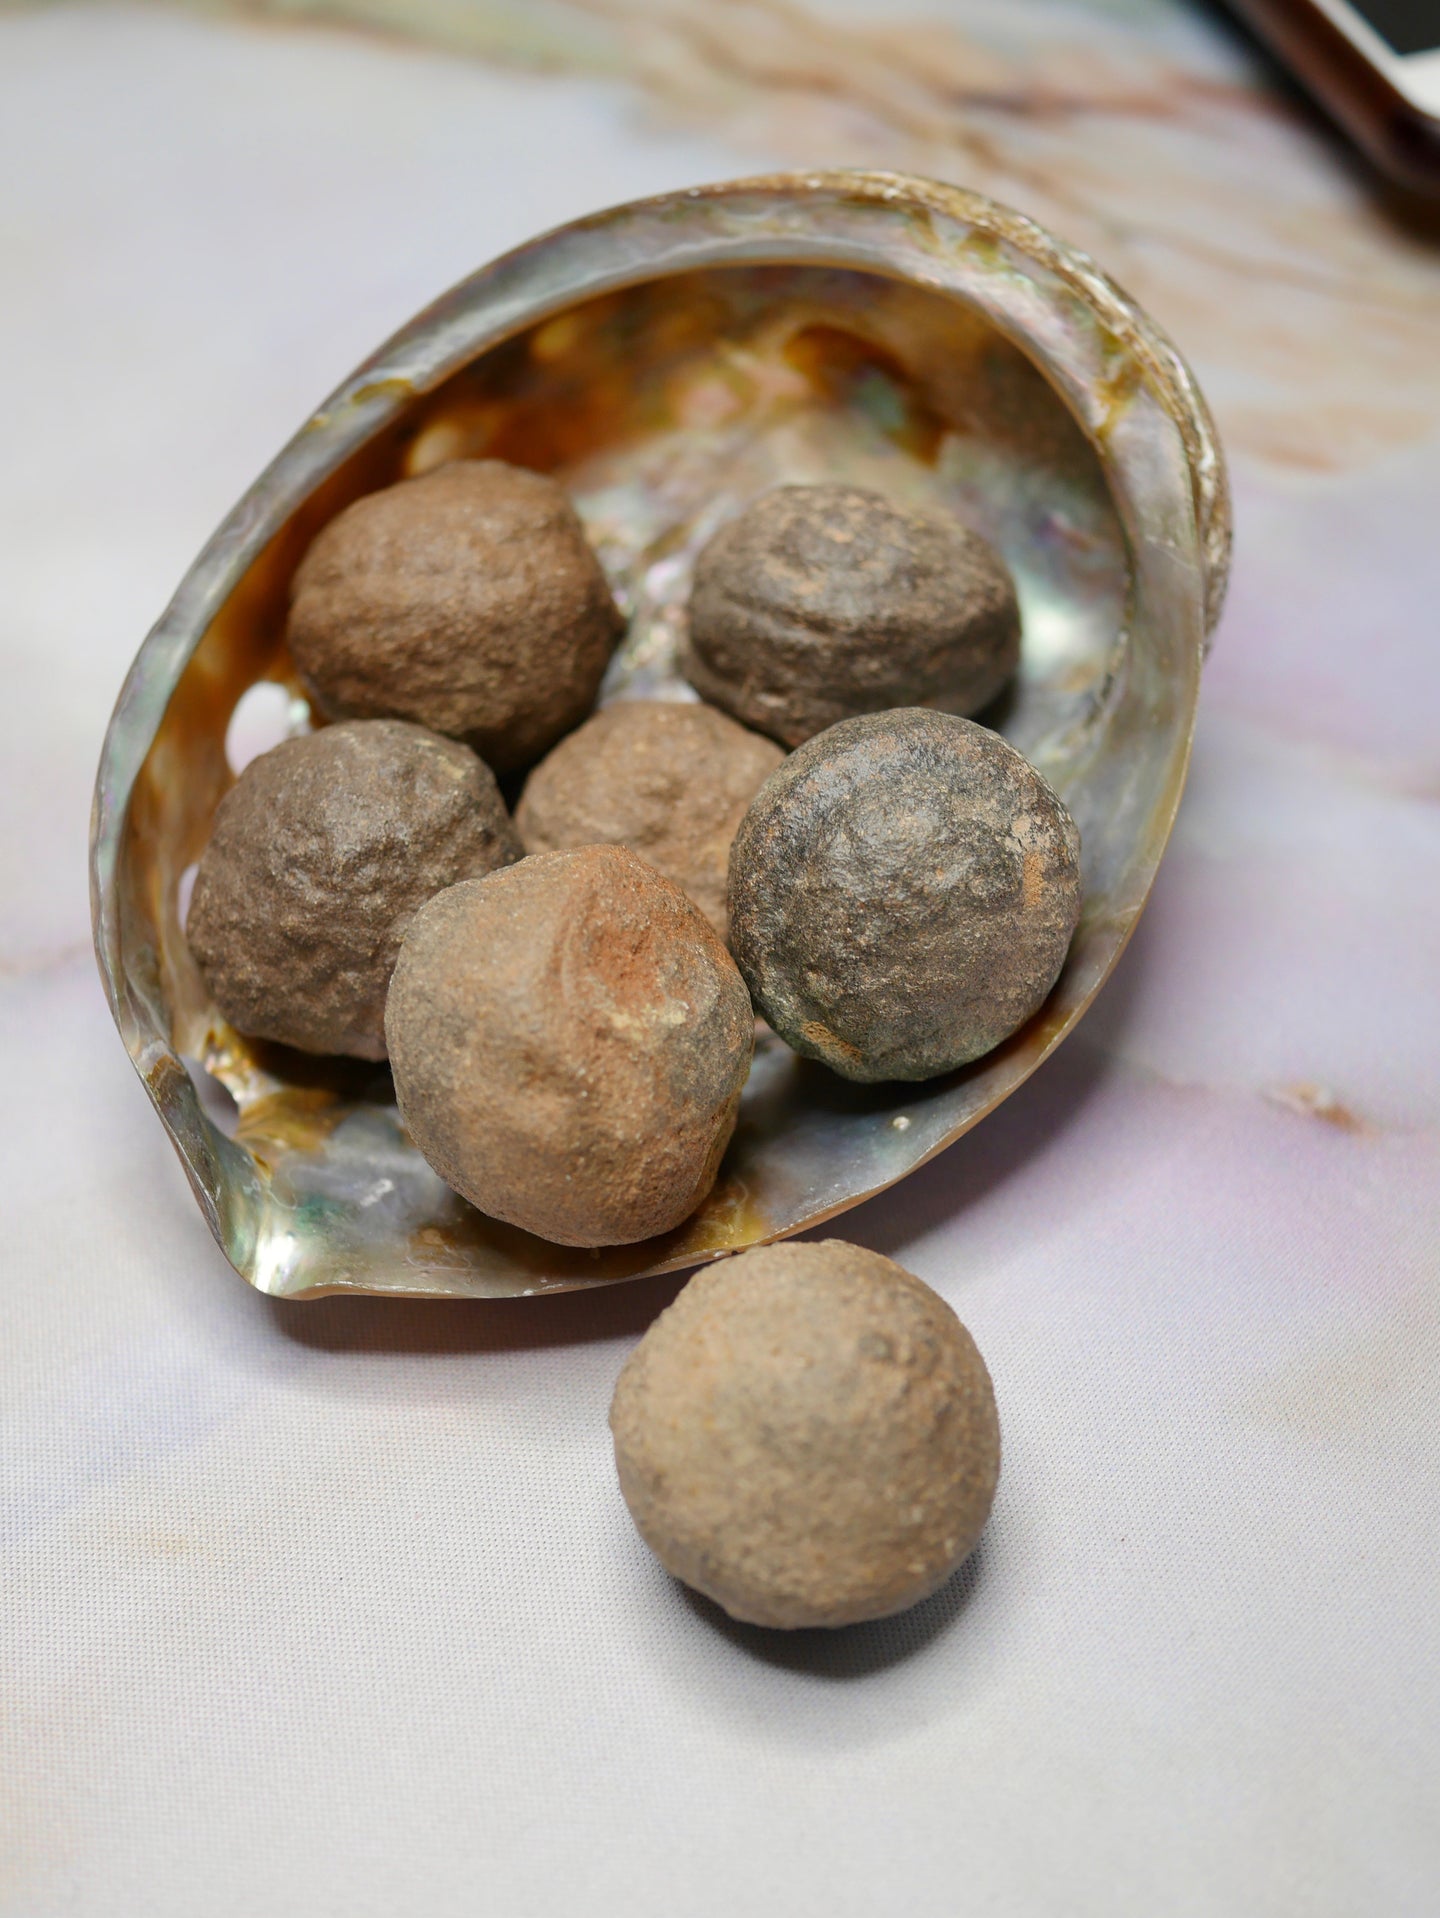 Shaman Stone / Moqui balls